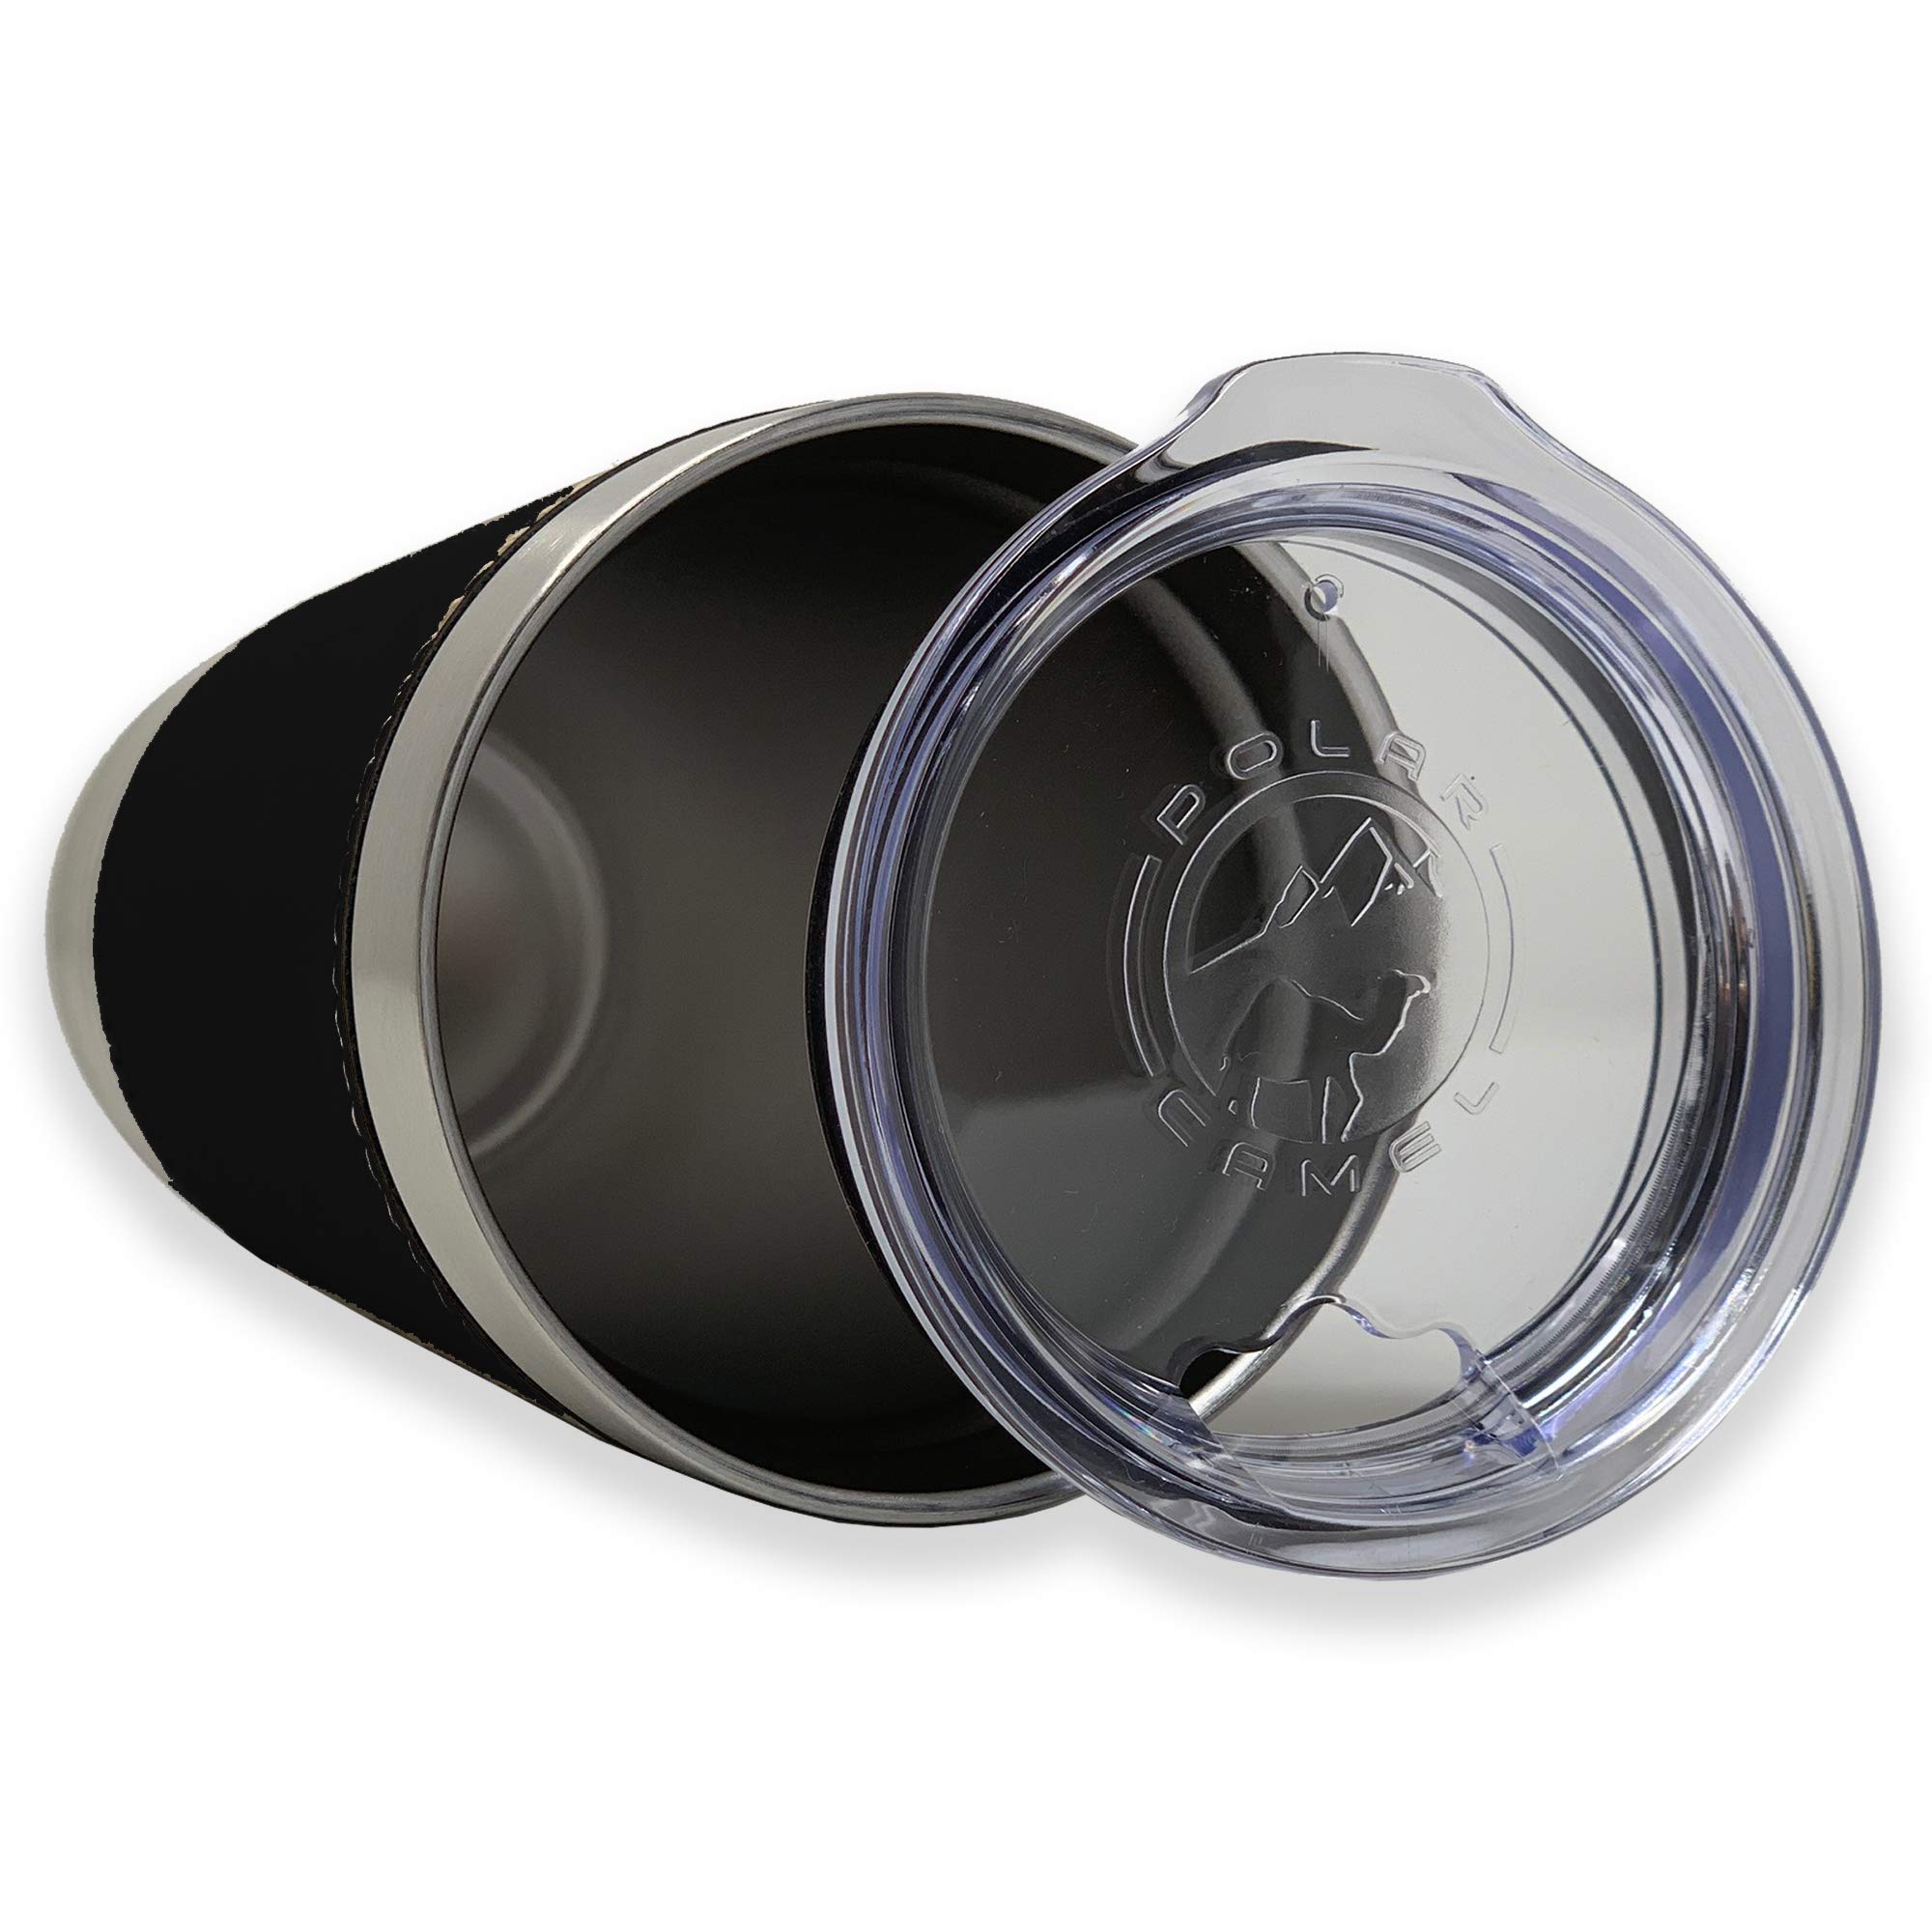 LaserGram 20oz Vacuum Insulated Tumbler Mug, Howling Wolf, Personalized Engraving Included (Faux Leather, Black)